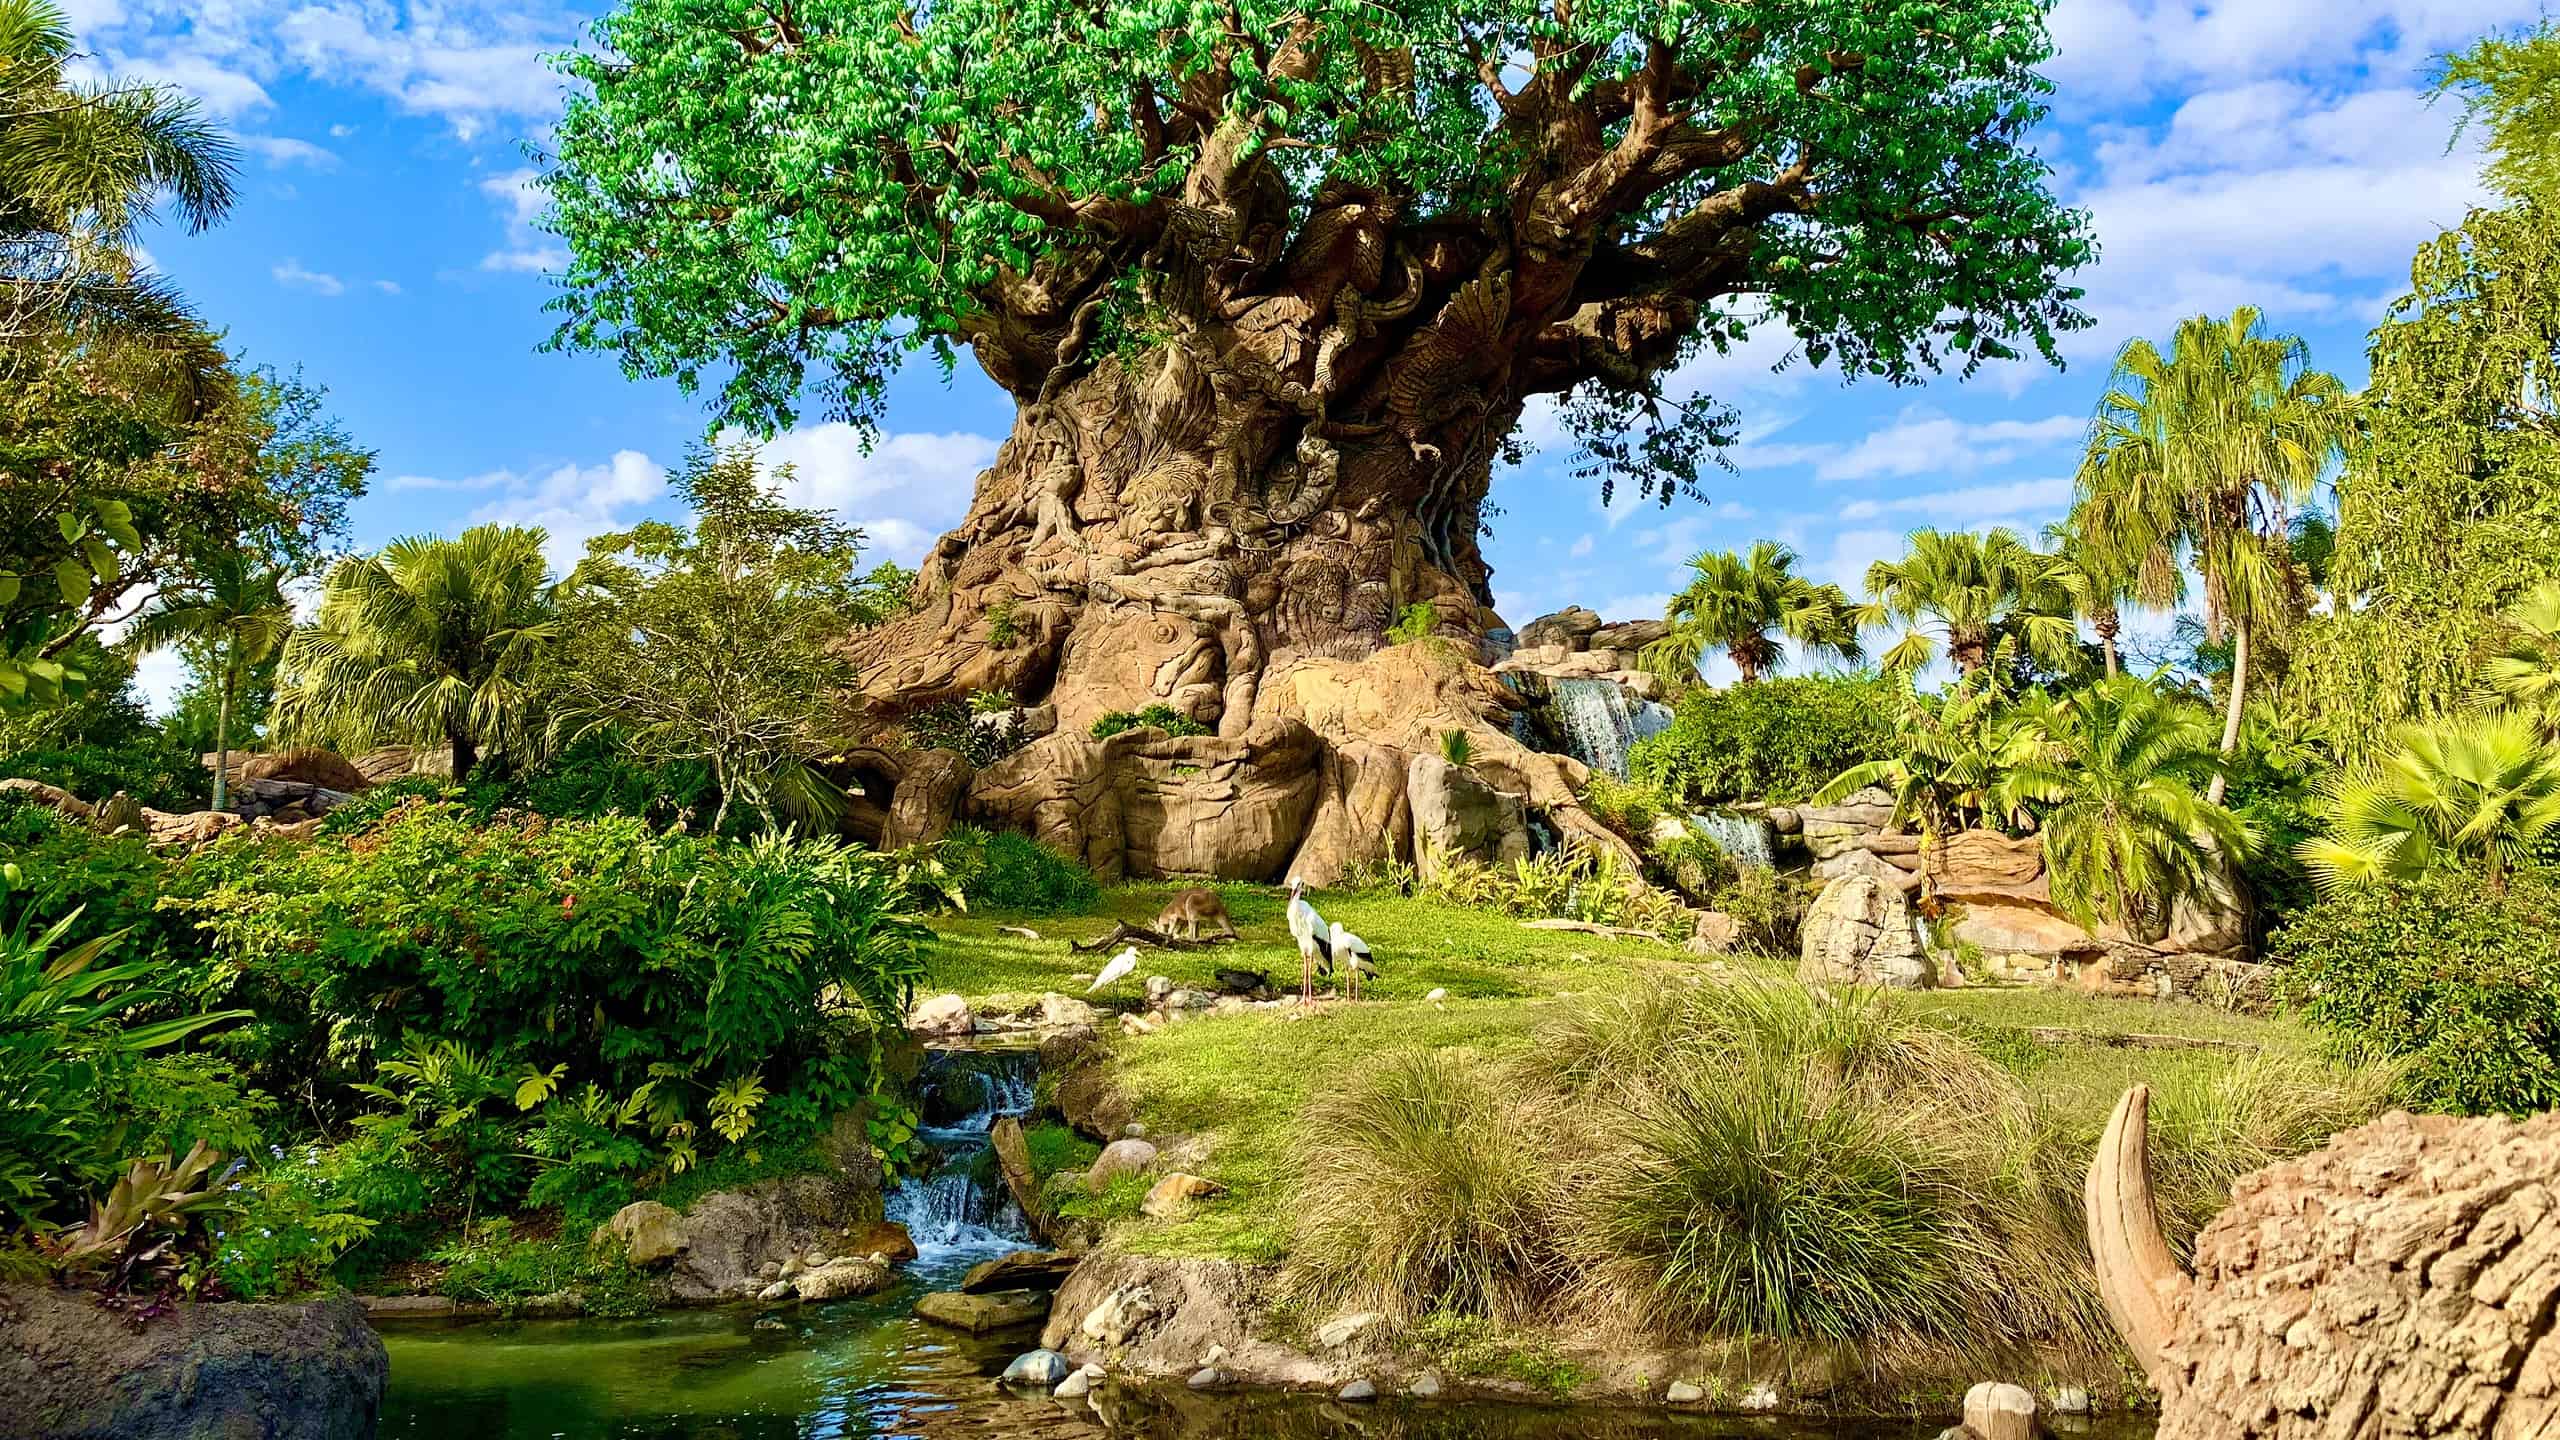 Tree of Life, Disney's Animal Kingdom